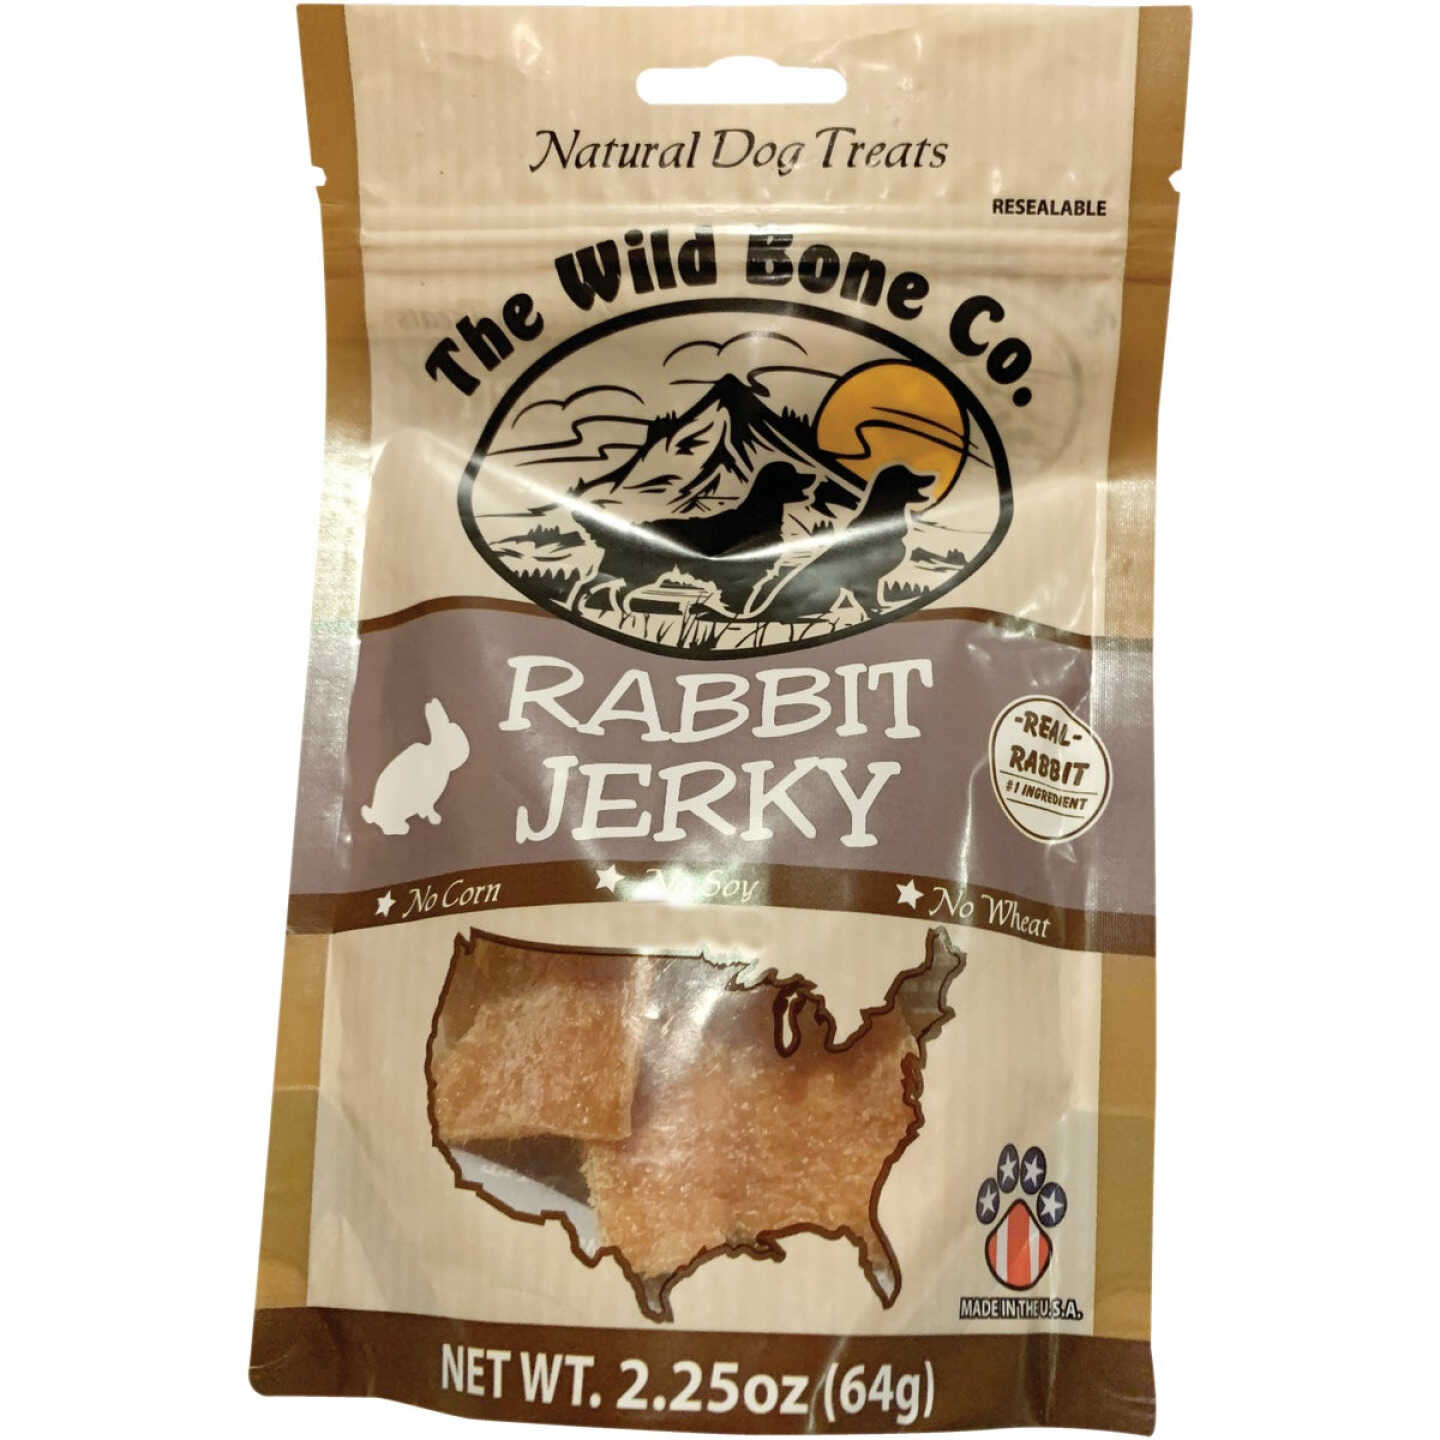 The Wild Bone Co. Rabbit Jerky